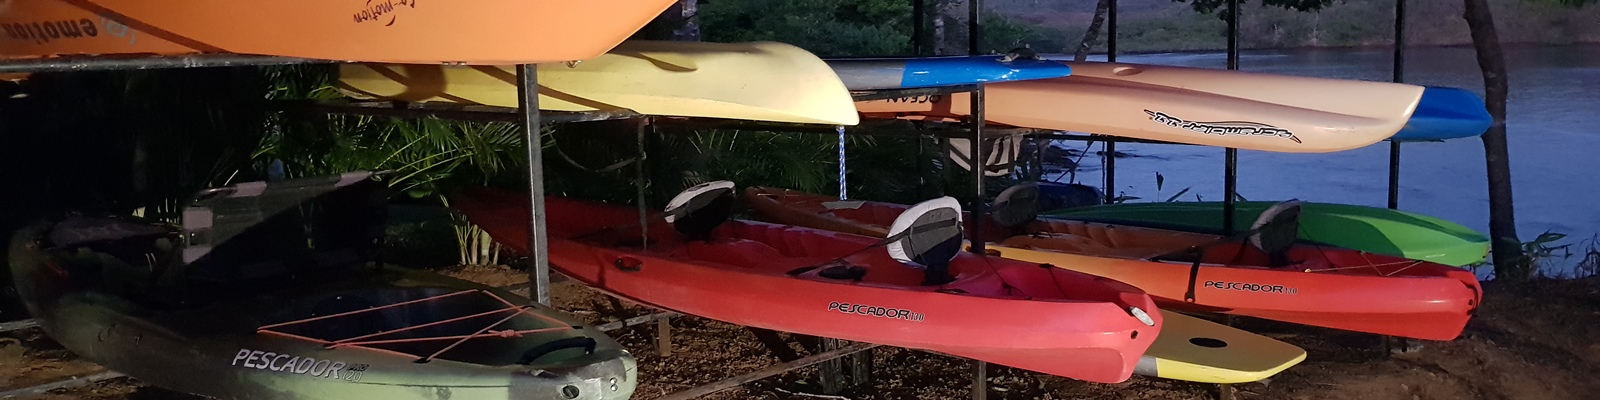 single or double kayak rental